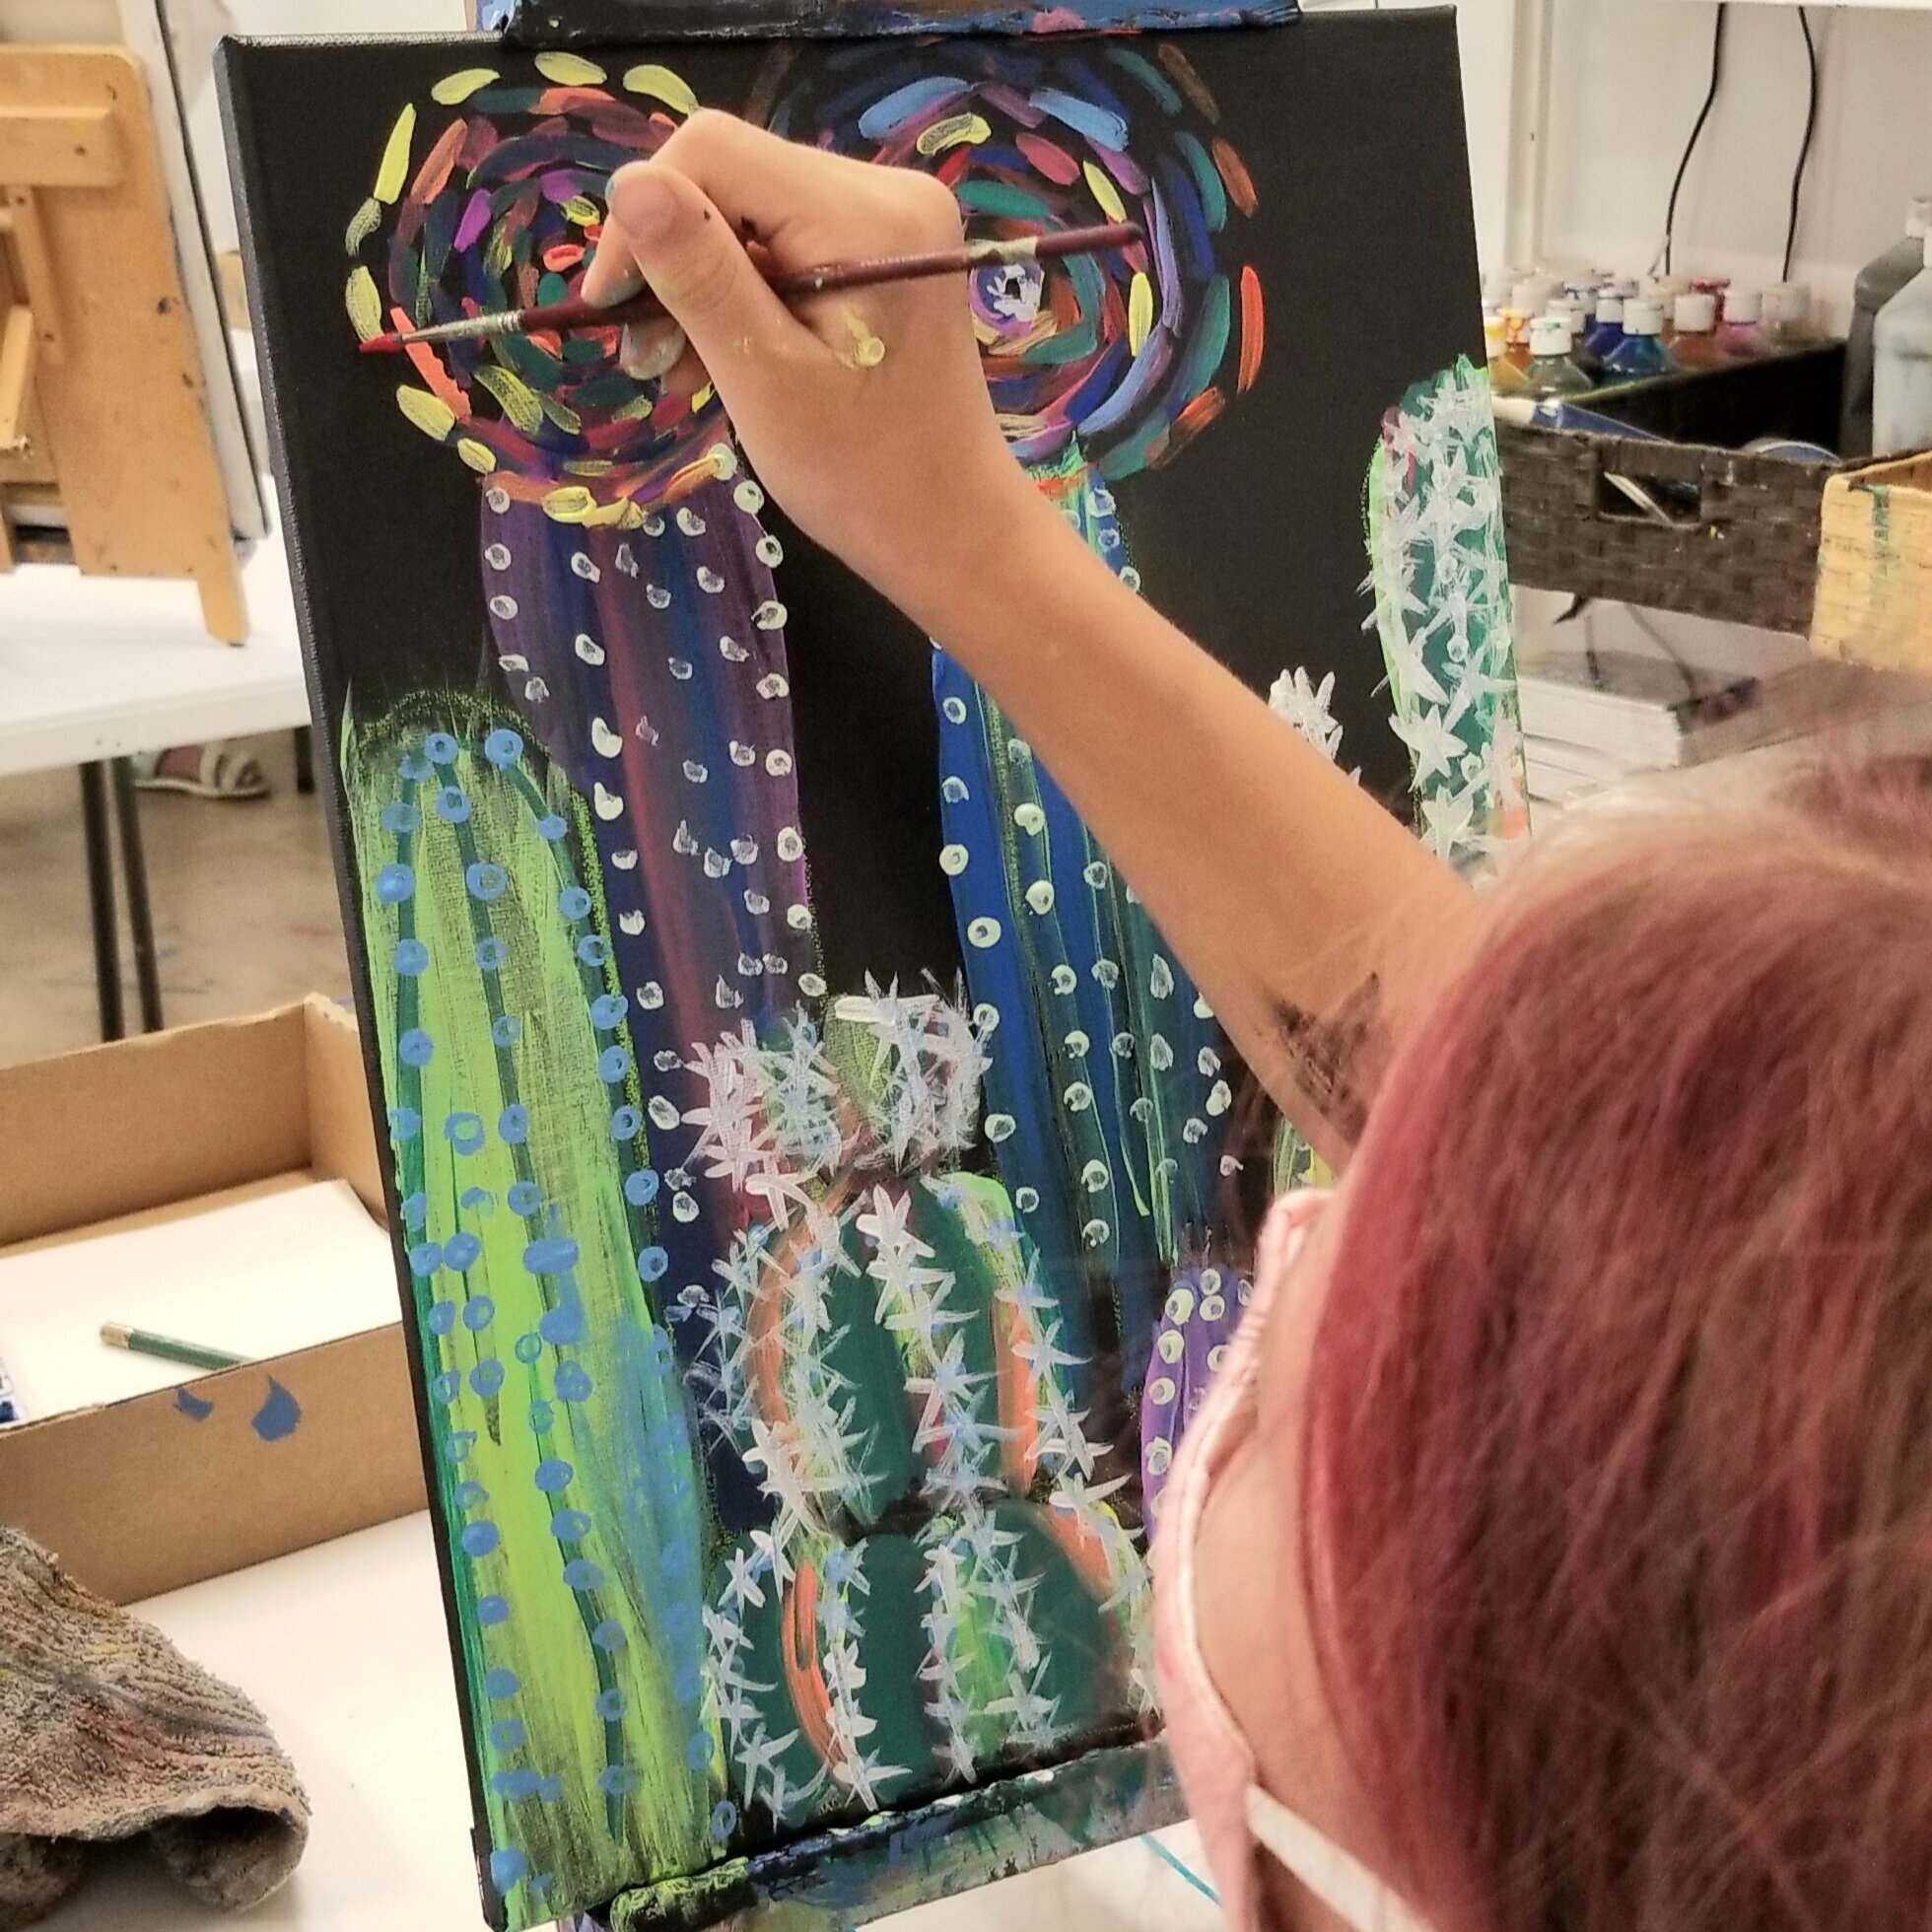 Tinker Art Studio - Classes, Parties, Community - Boulder, CO